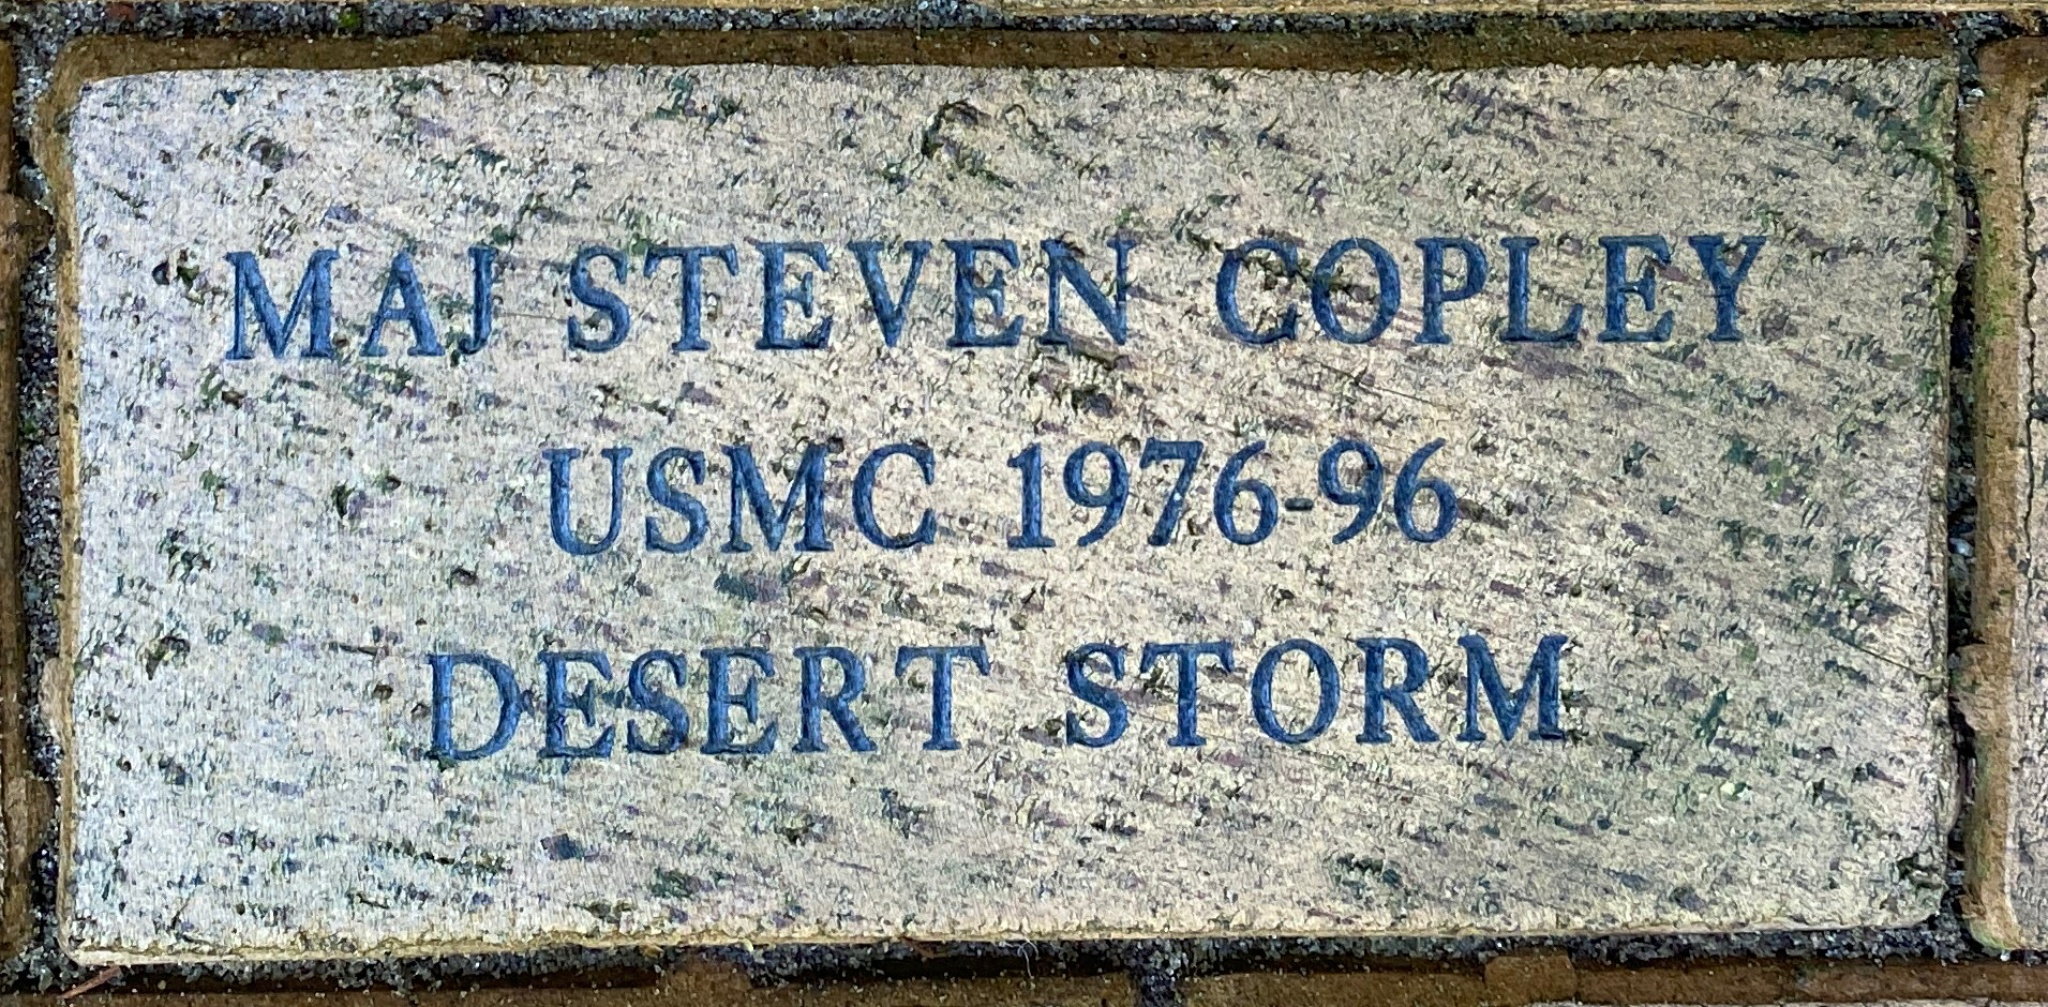 MAJ STEVEN COPLEY USMC 1976-96 DESERT STORM